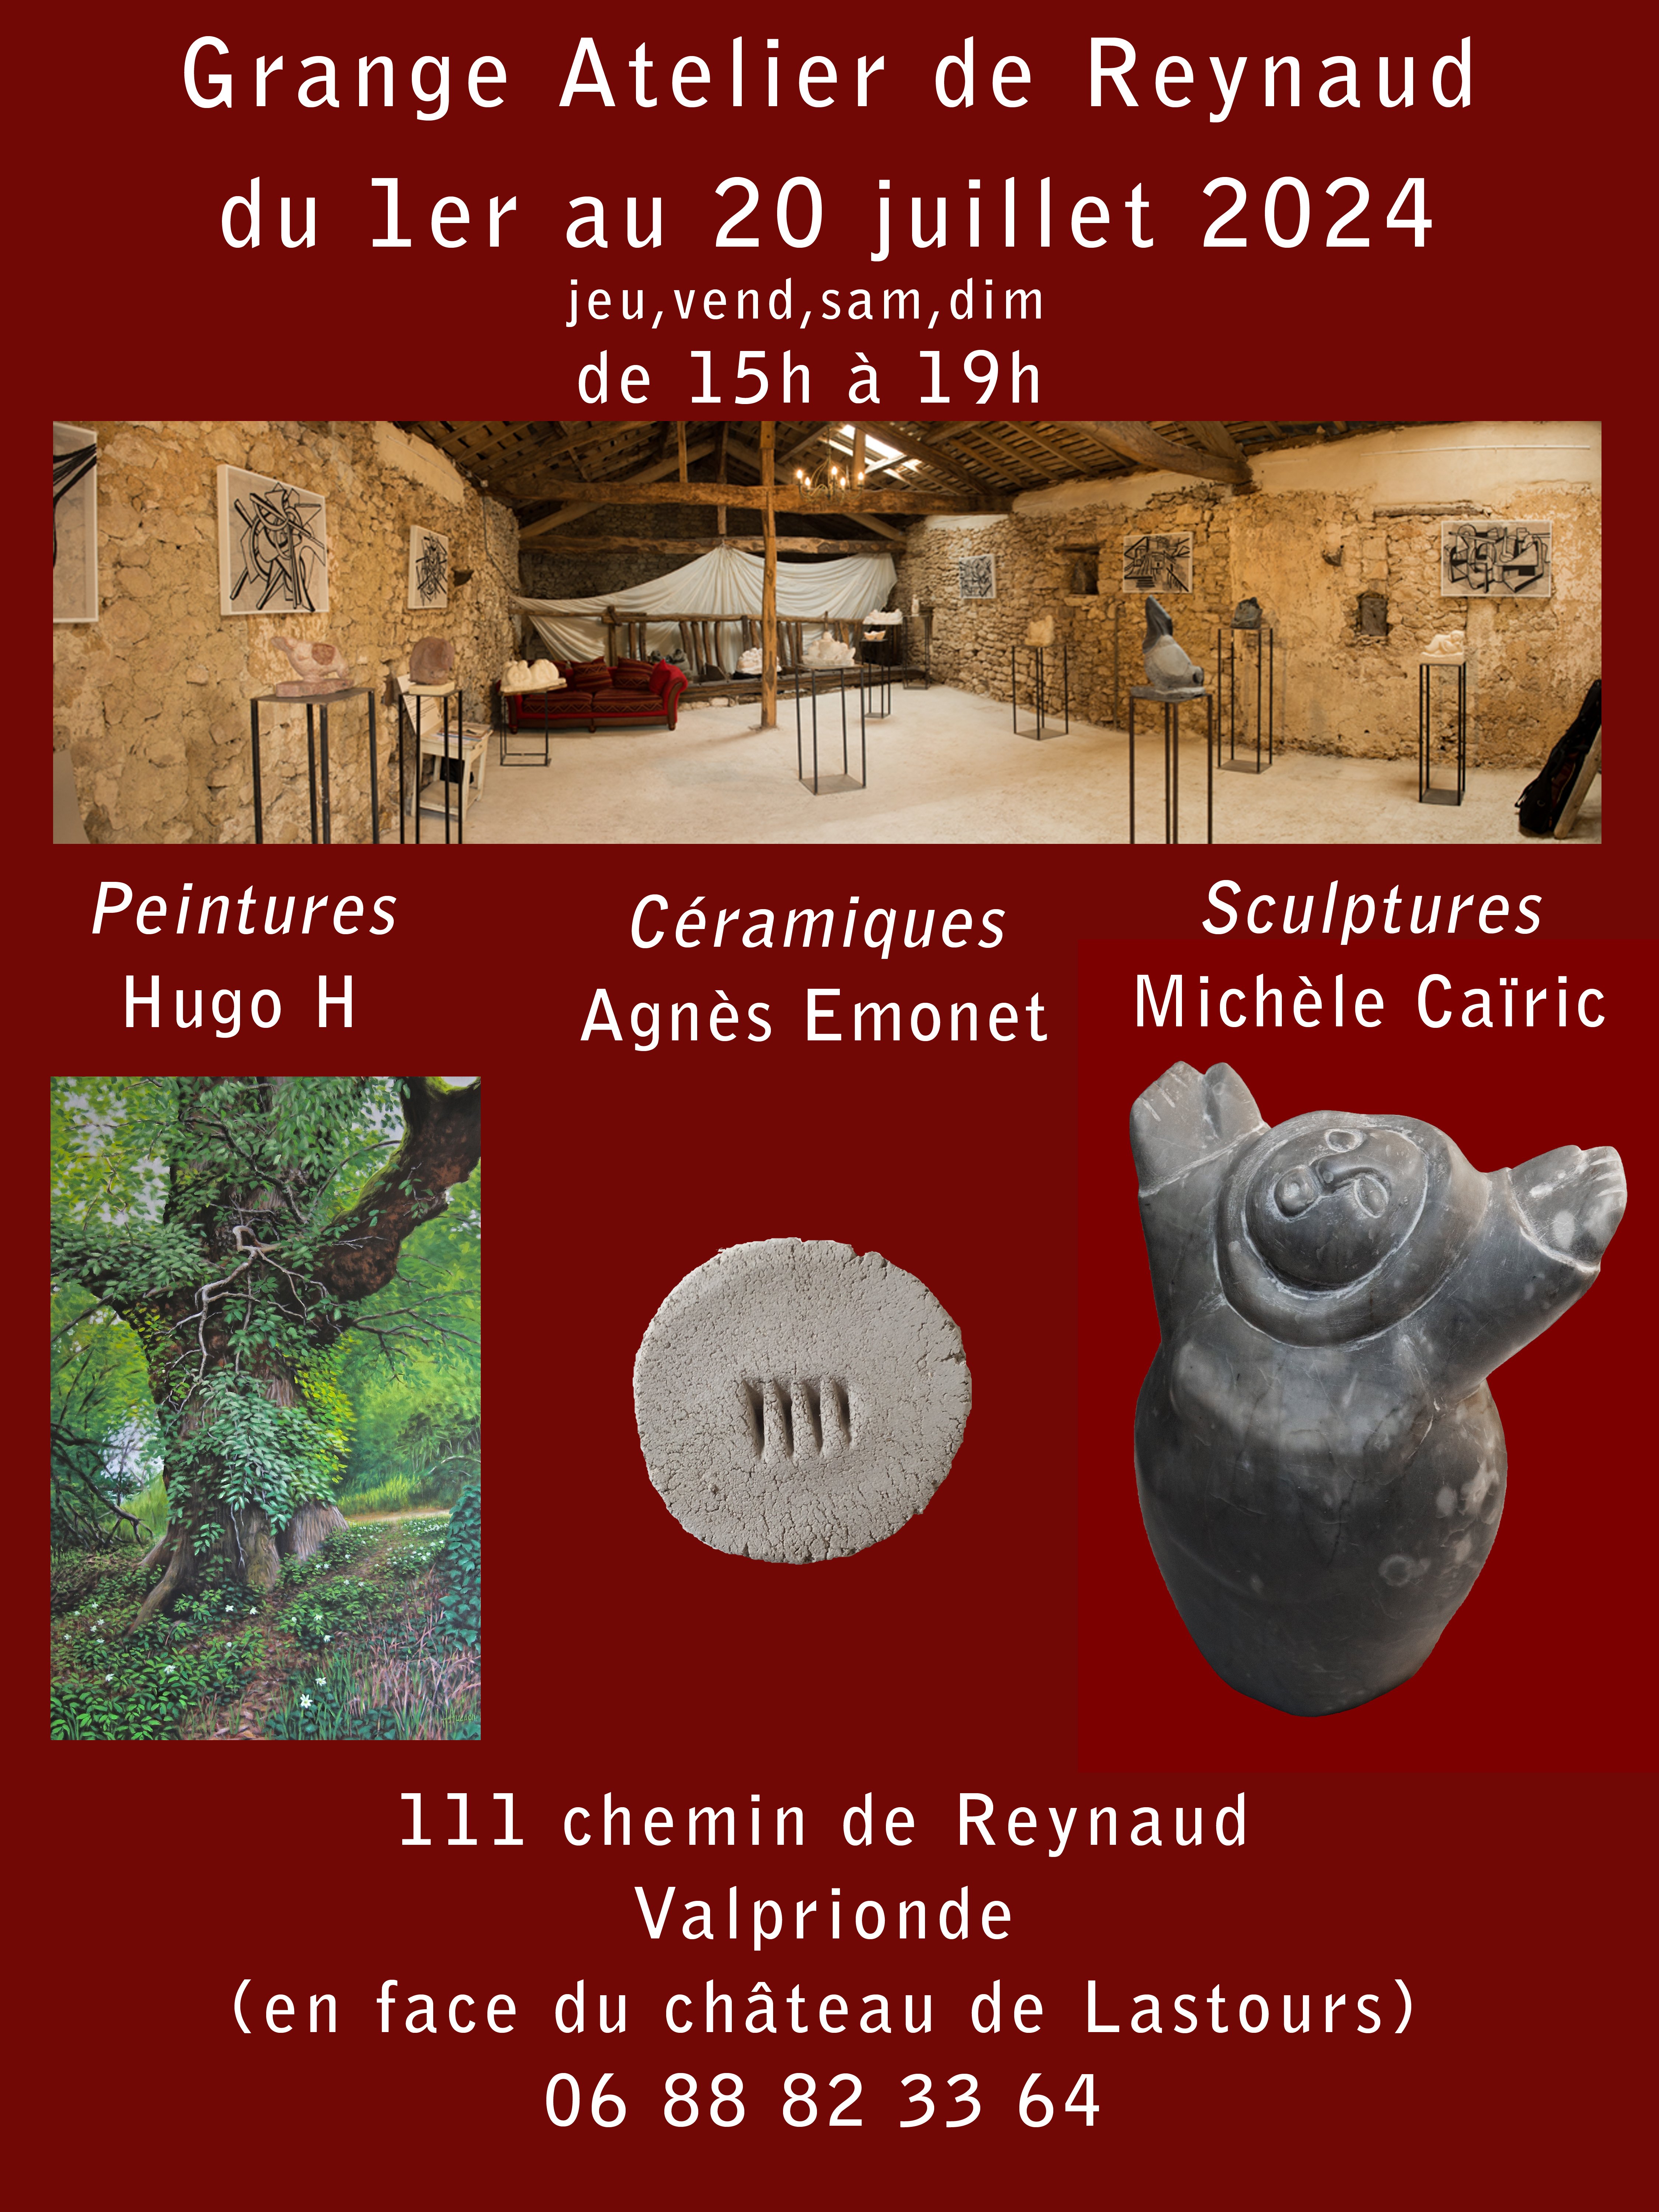 Figeac : Exposition à la Grange Atelier de Reynaud